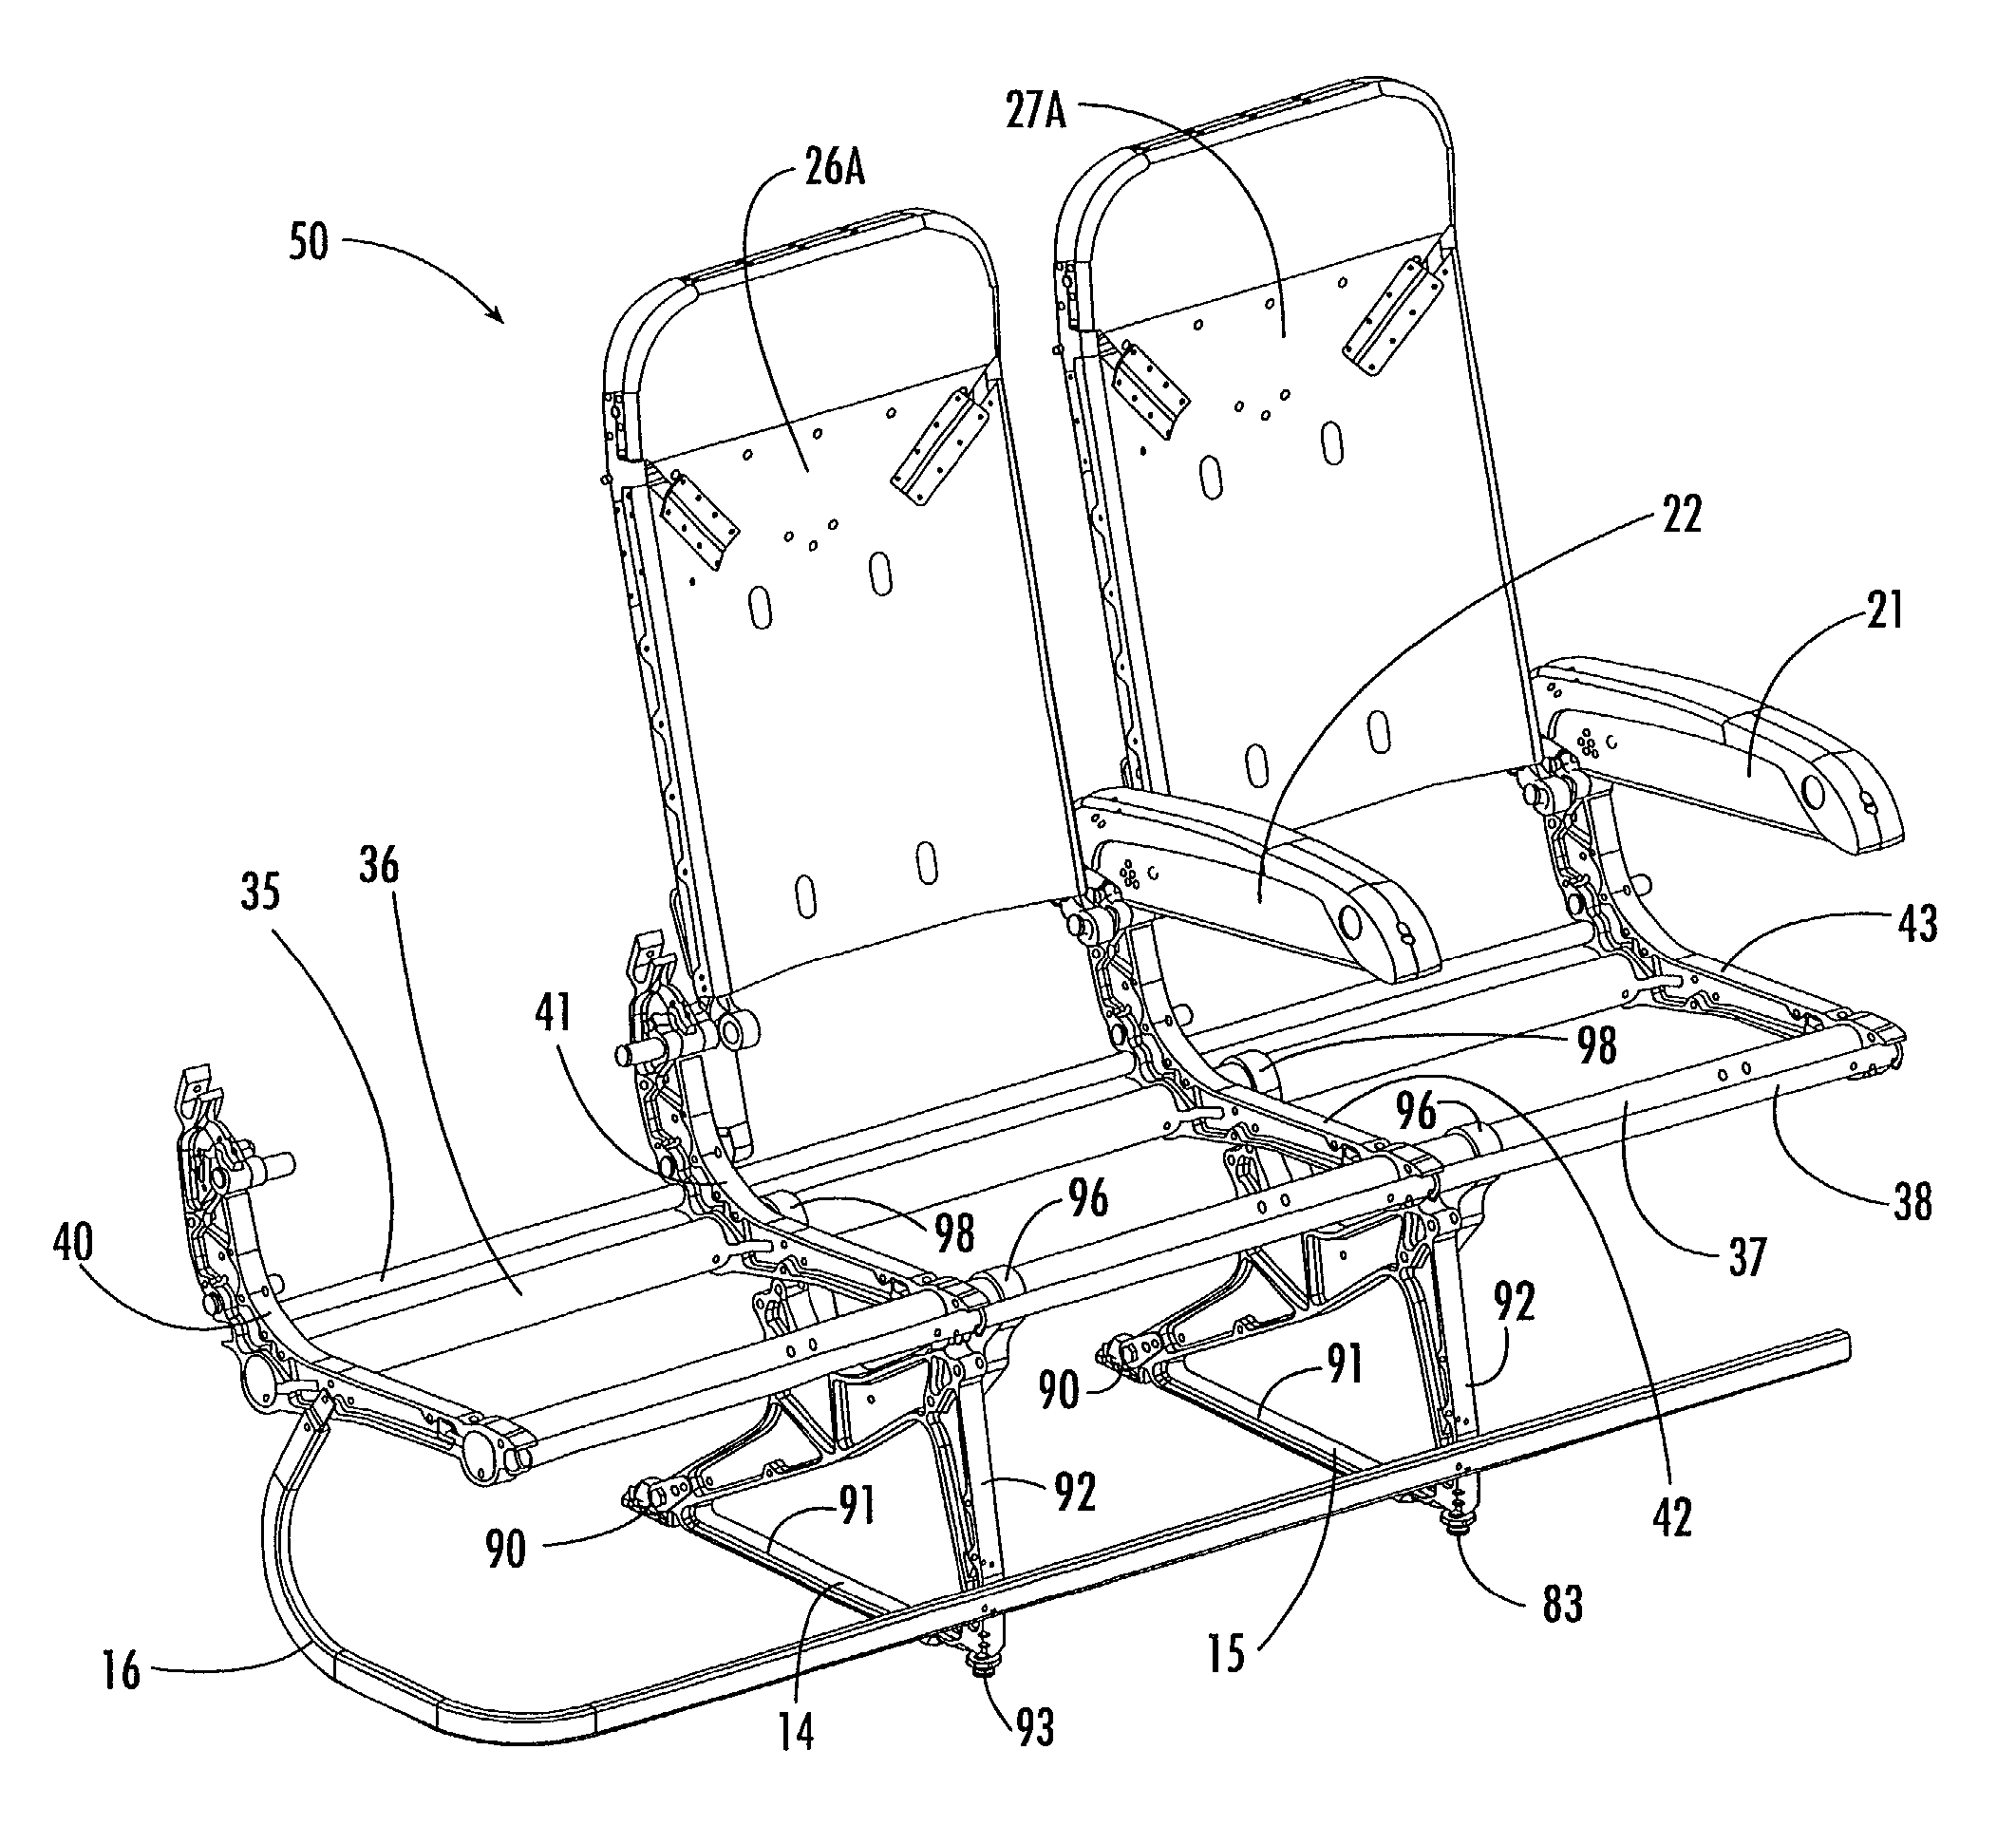 Aircraft passenger seat frame construction